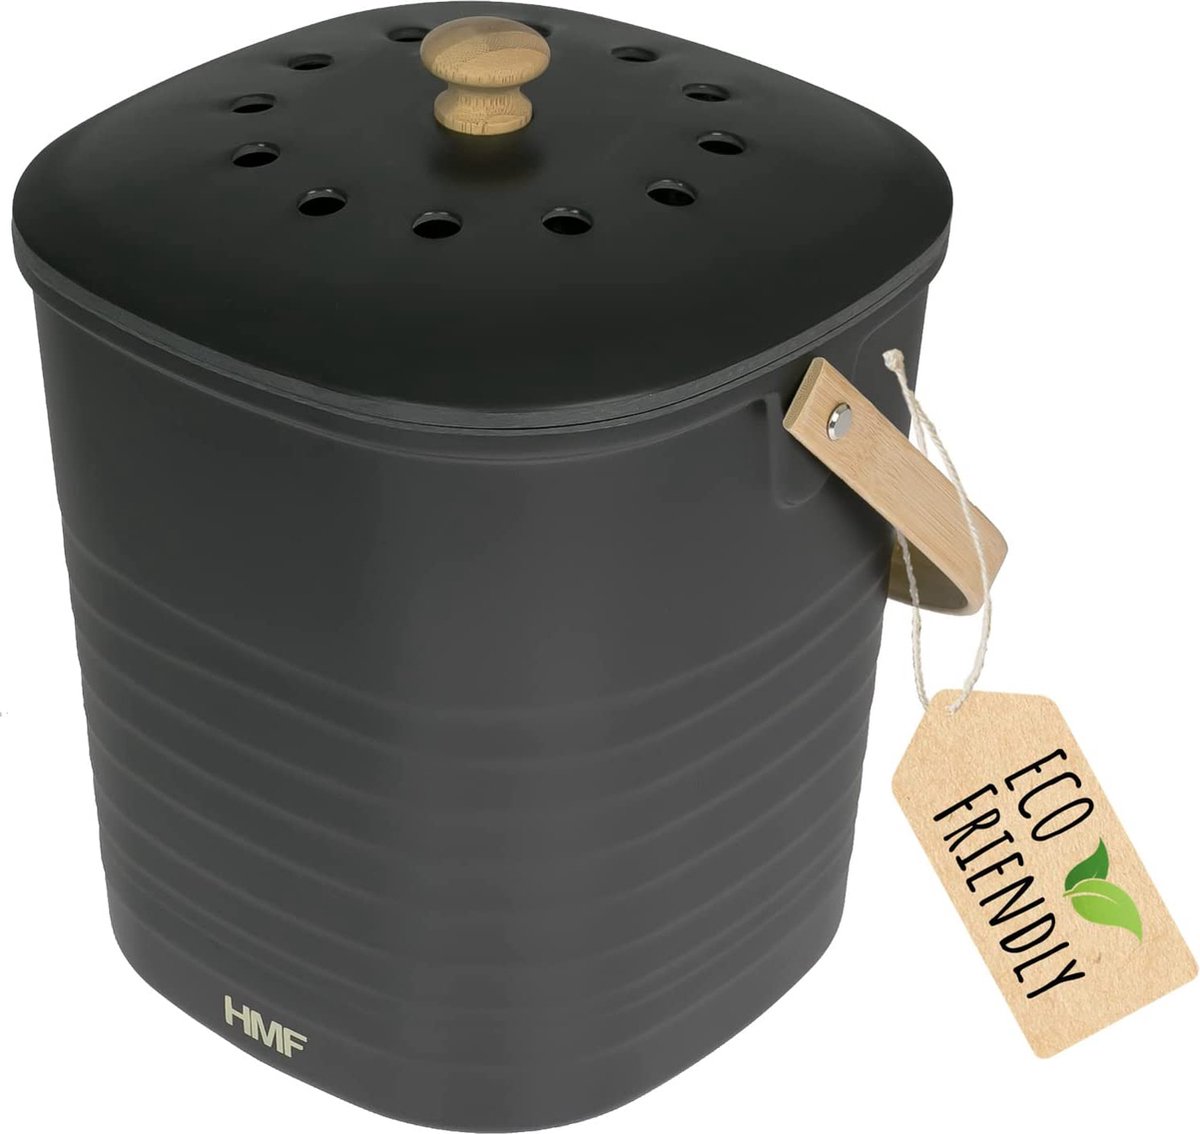 HMF Duurzame bio-afvalemmer keuken, geurdichte compostemmer met deksel, 6 liter, zwart